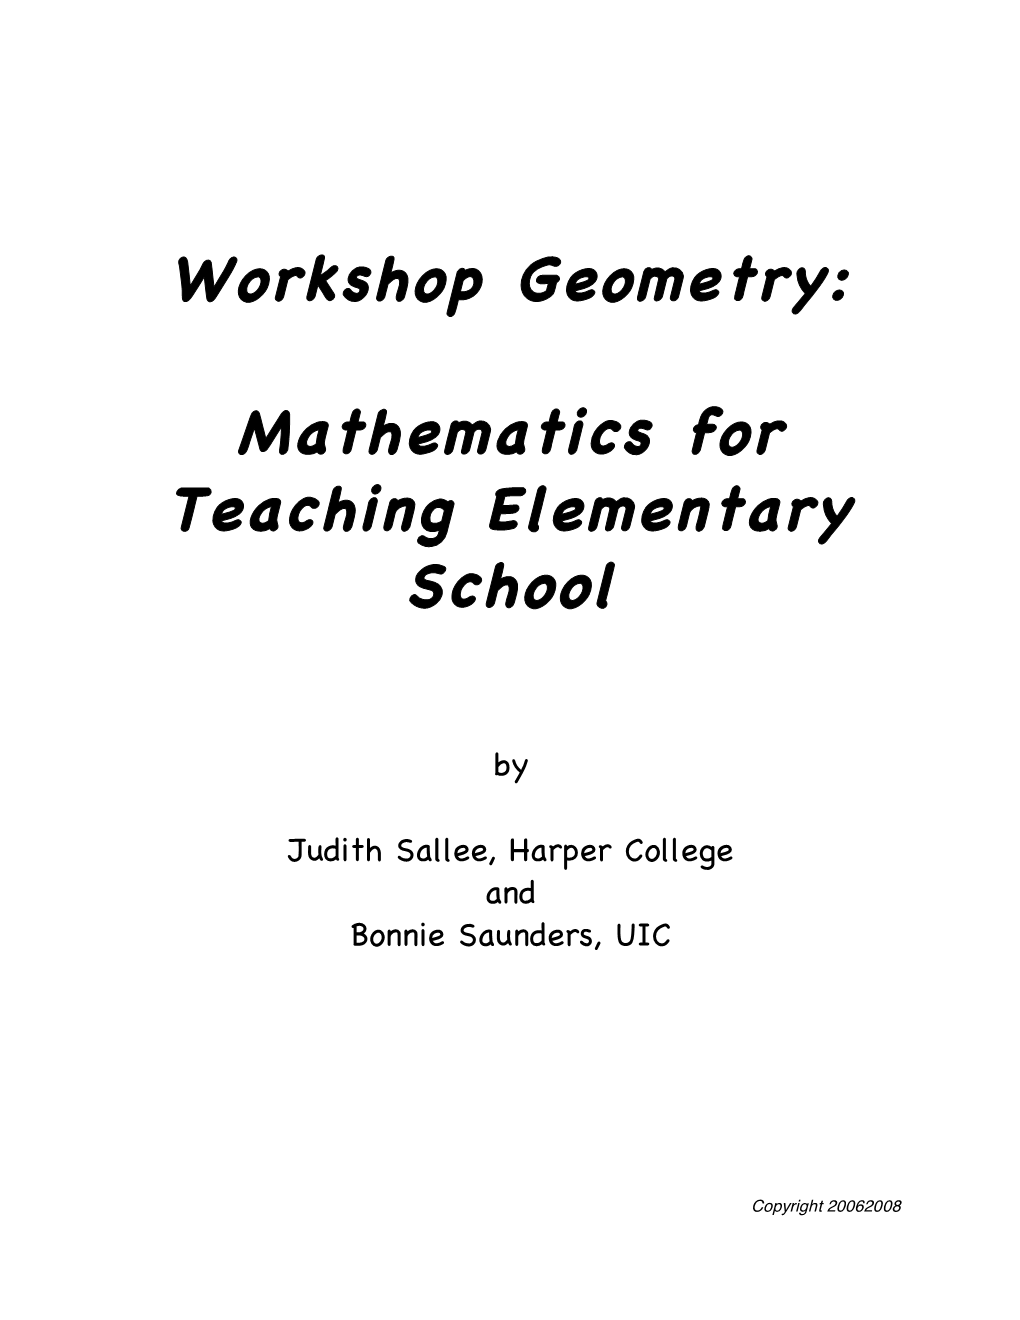 Workshop Geometry: Mathematics for Teaching Elementary School